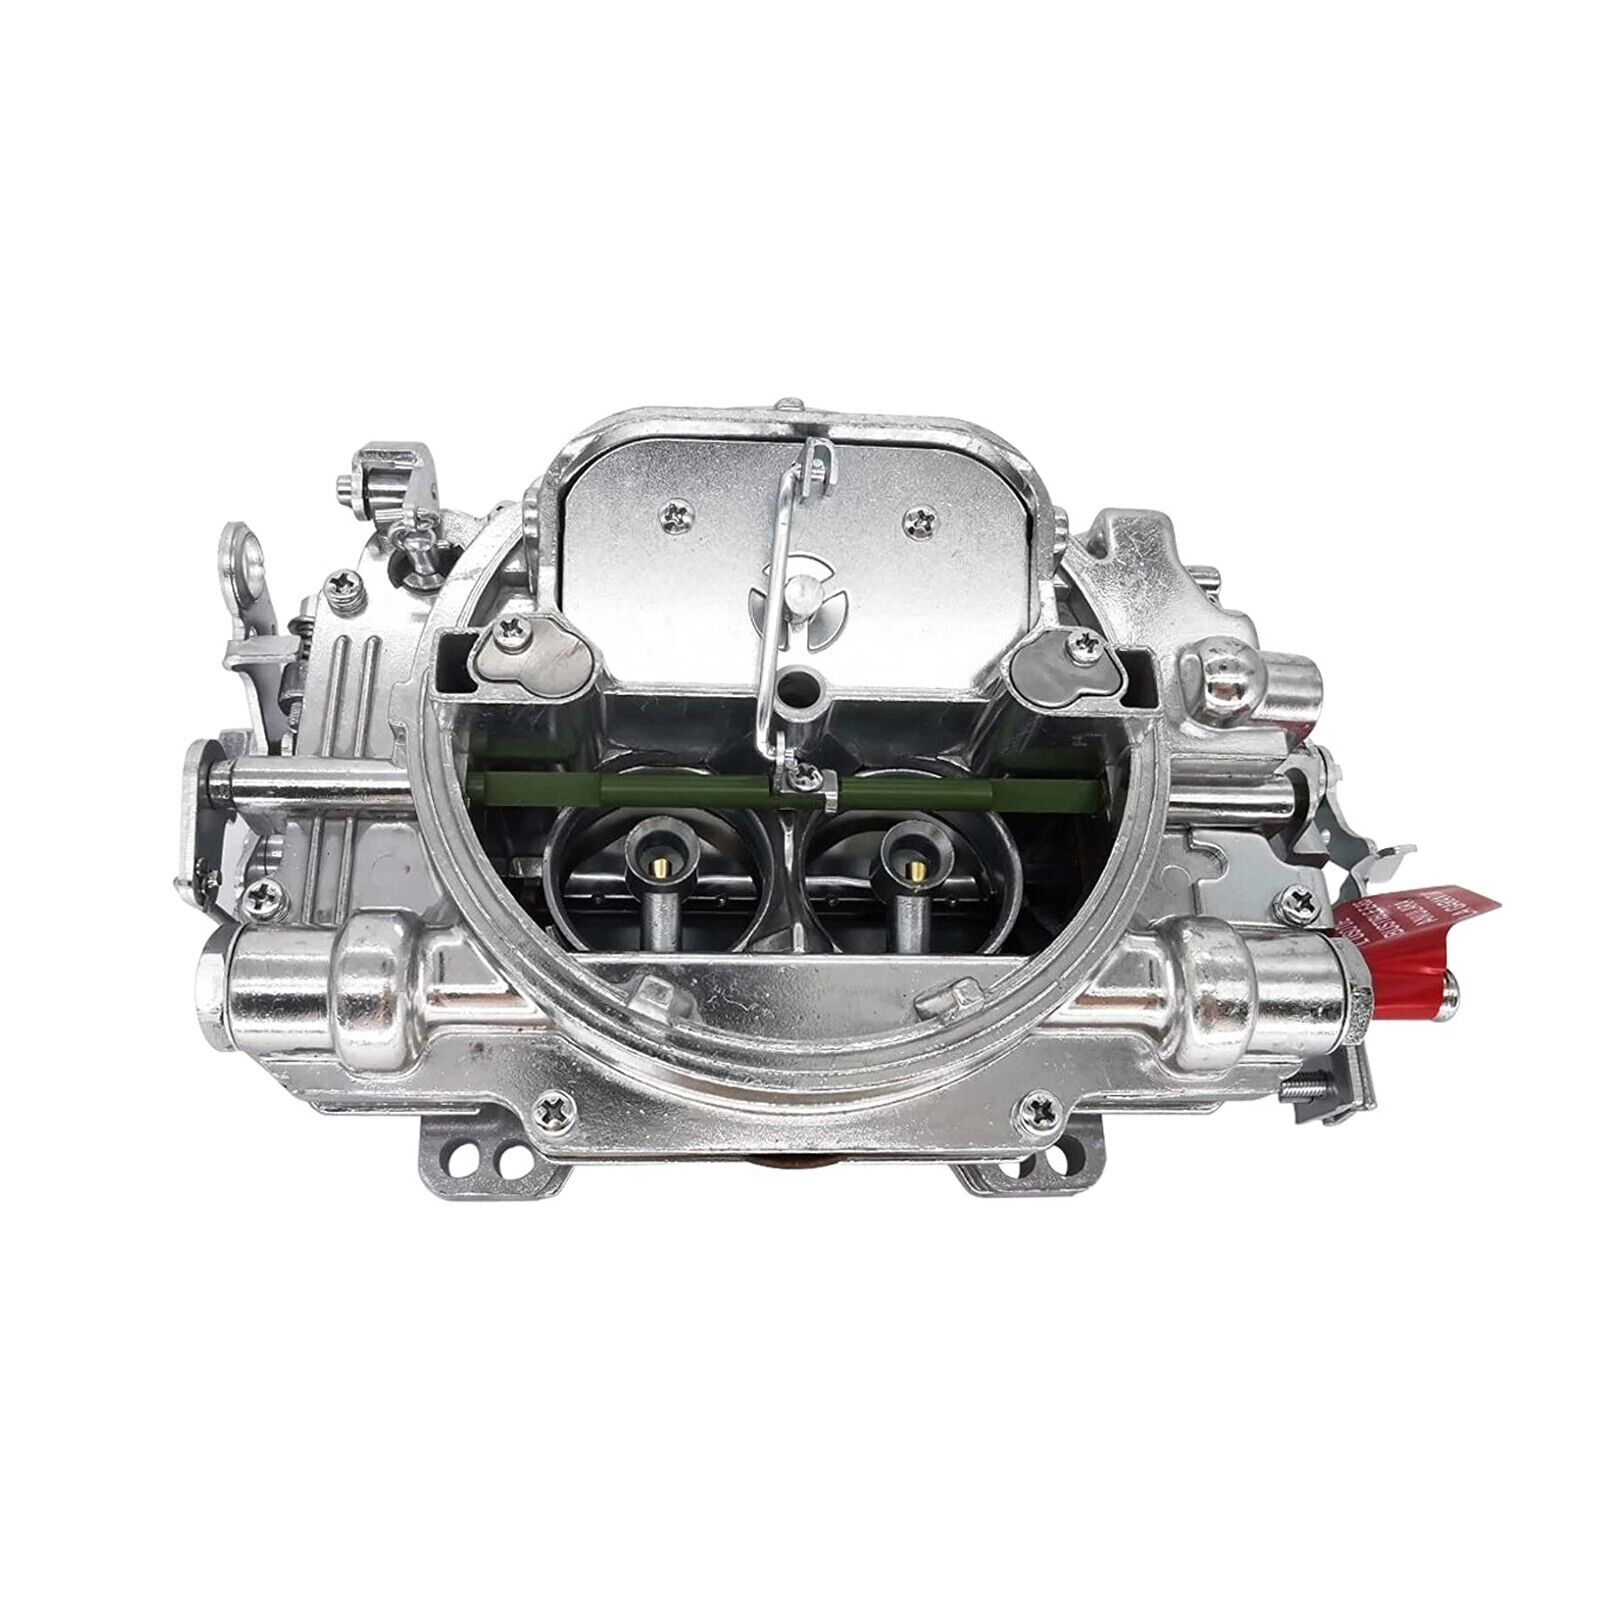 1405 Carburetor for Edelbrock Performer 600 CFM 4 Barrel Carb W/ Manual Choke